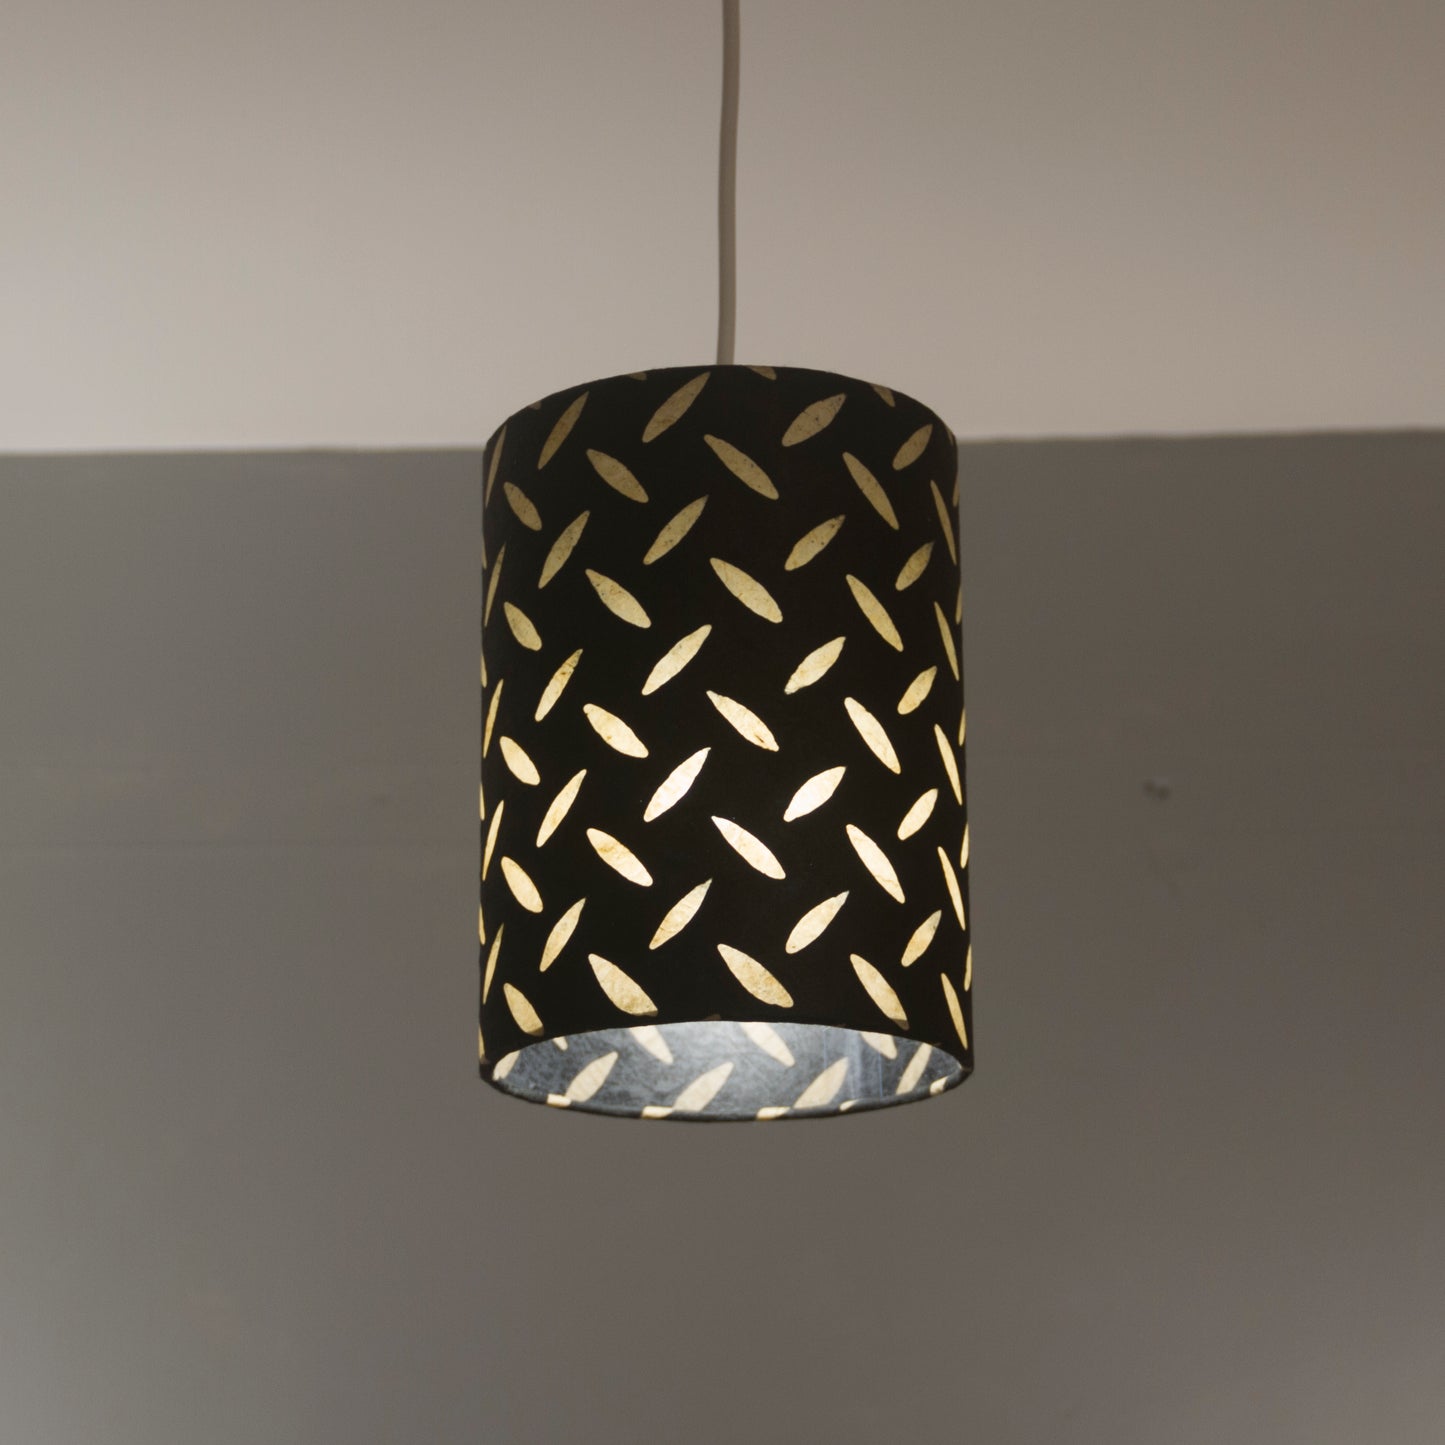 Drum Lamp Shade - P11 - Batik Tread Plate Black, 50cm(d) x 20cm(h)